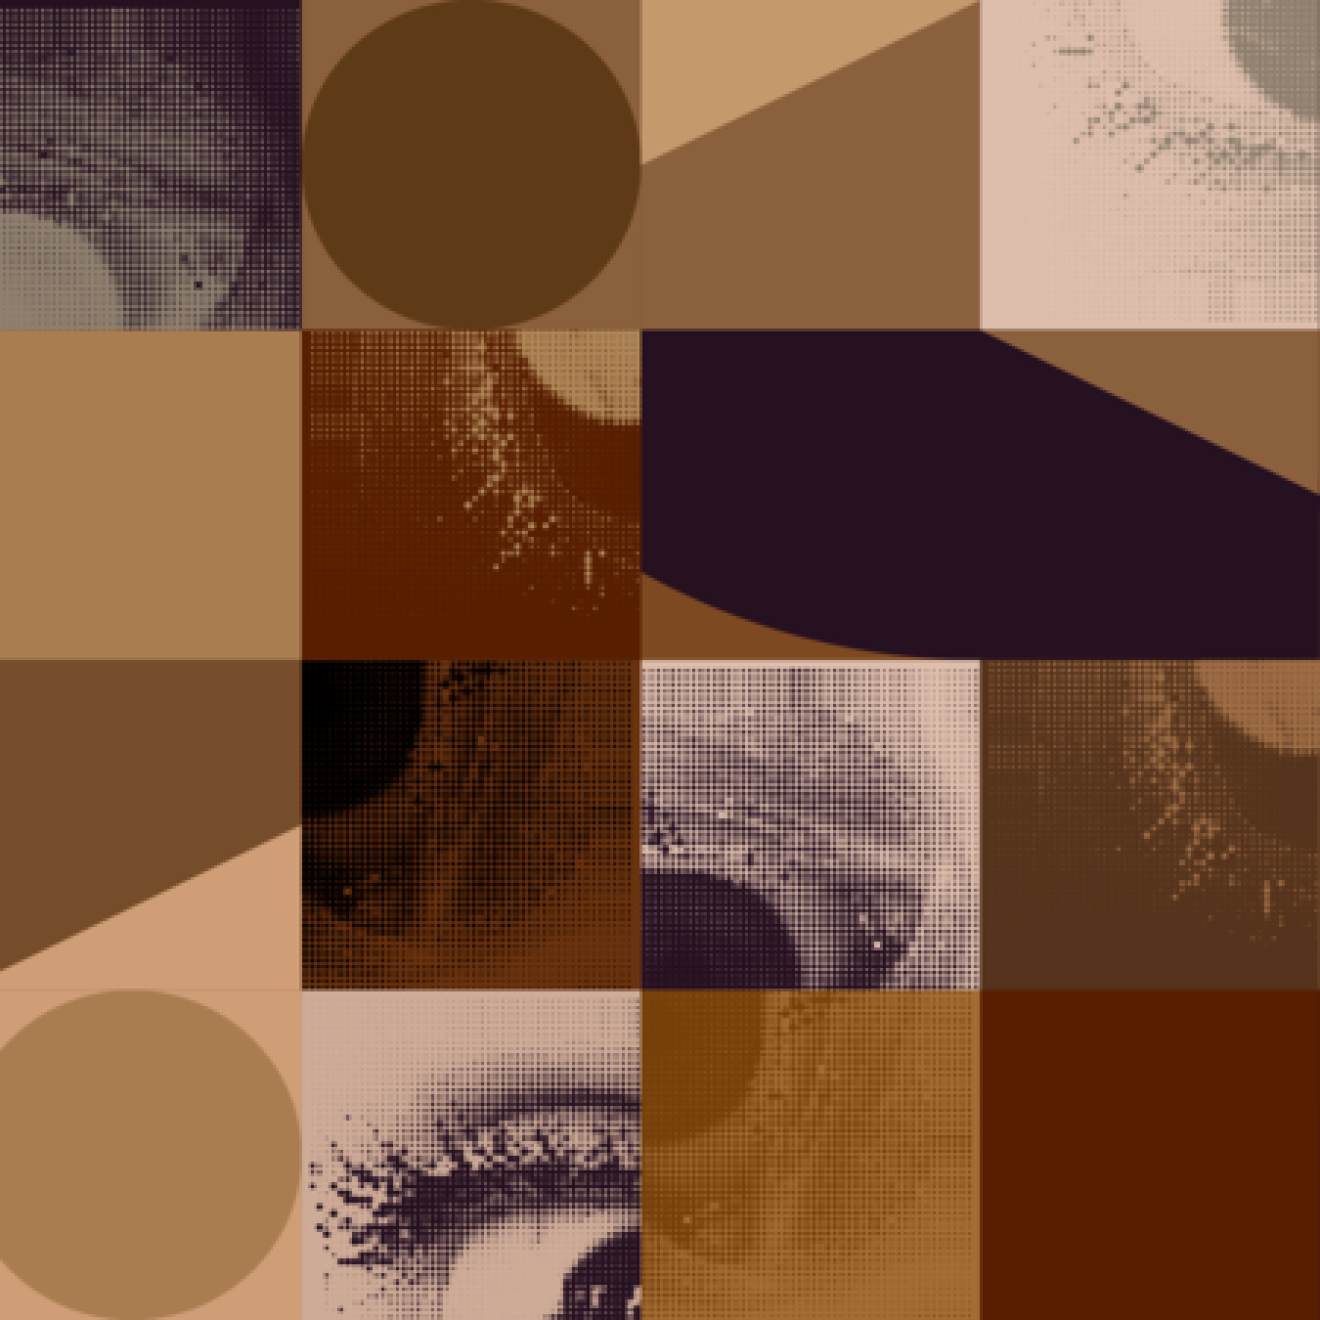 Brown mosaic of panels and eyes